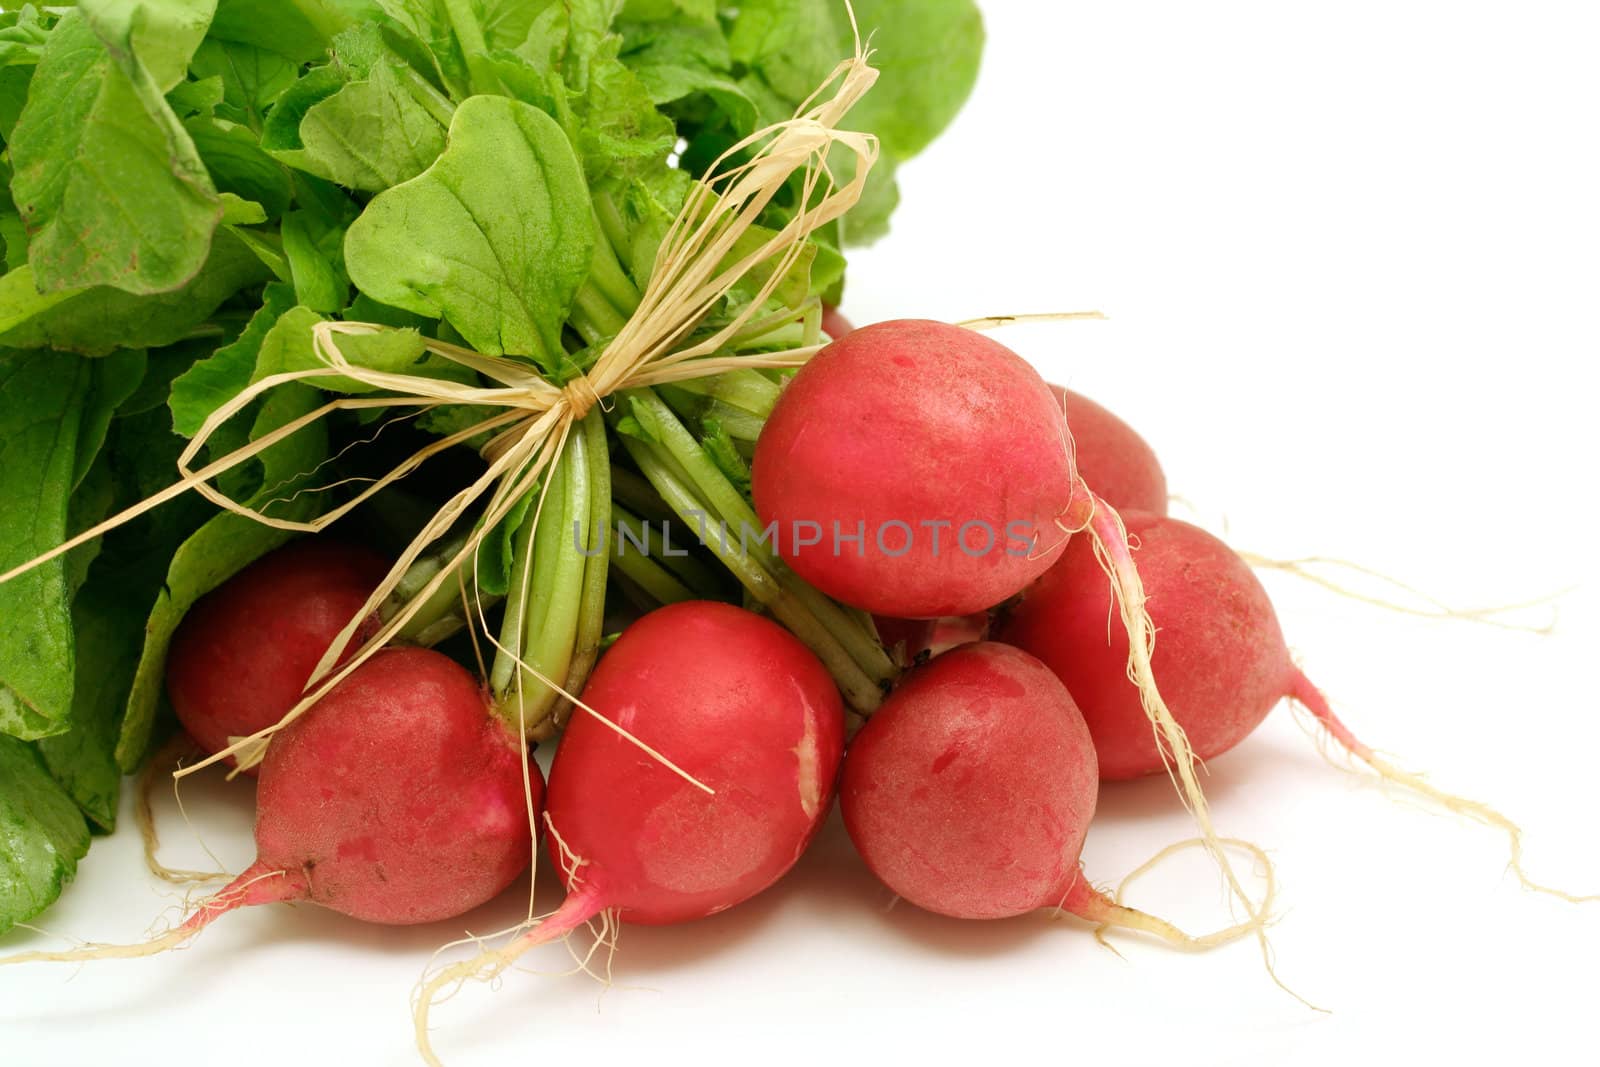 Bundle of fresh radishes by Hbak